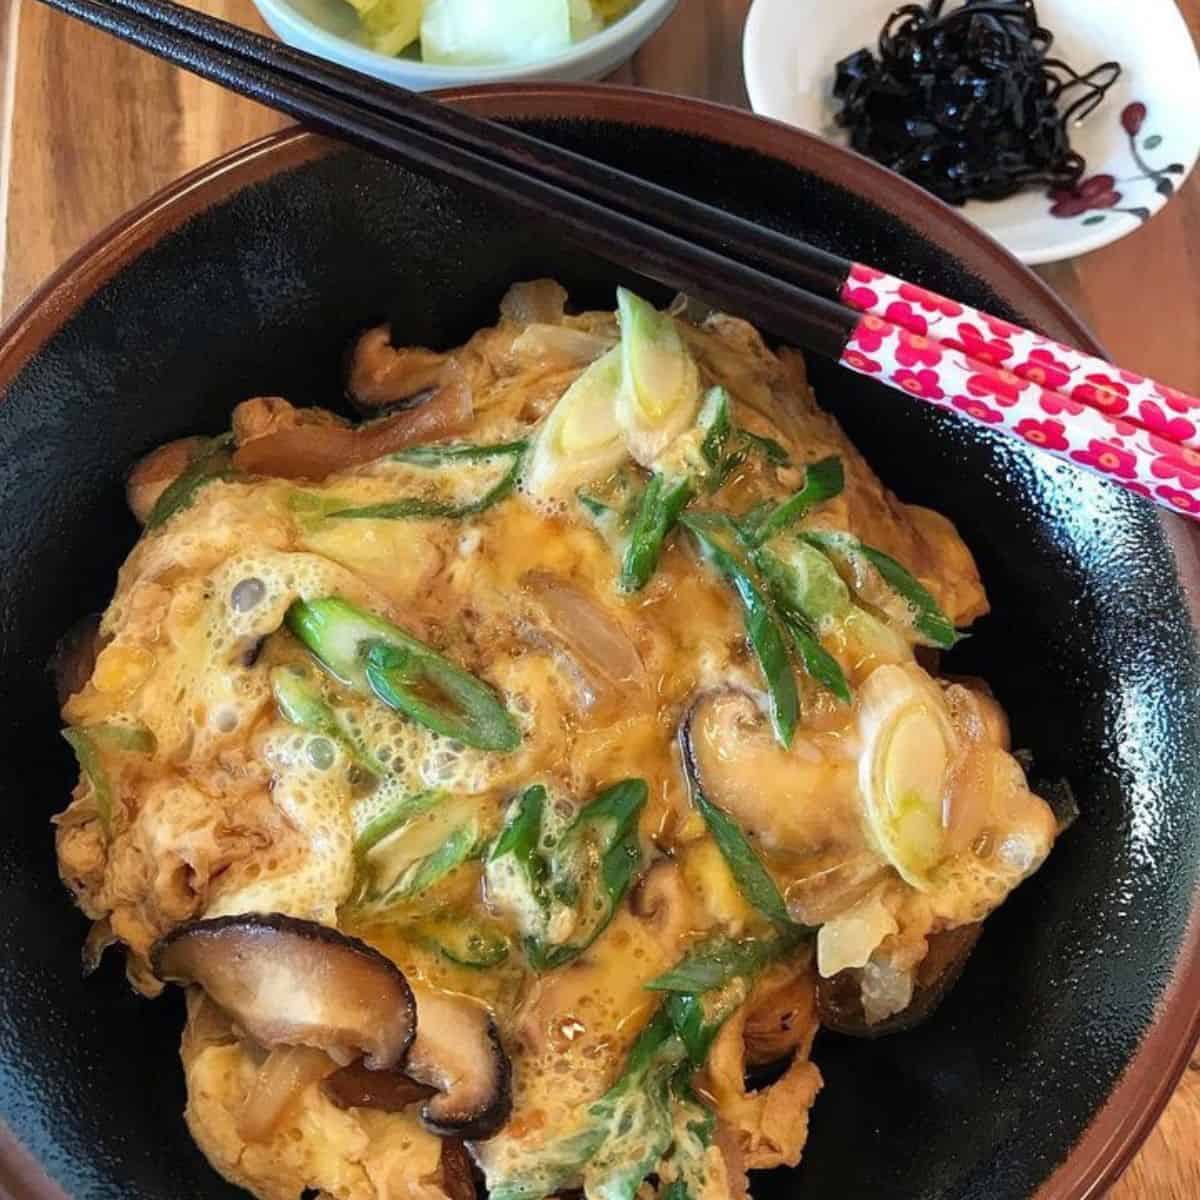 Vegetarian Oyako Donburi using Shitake mushrooms and meat substitutes